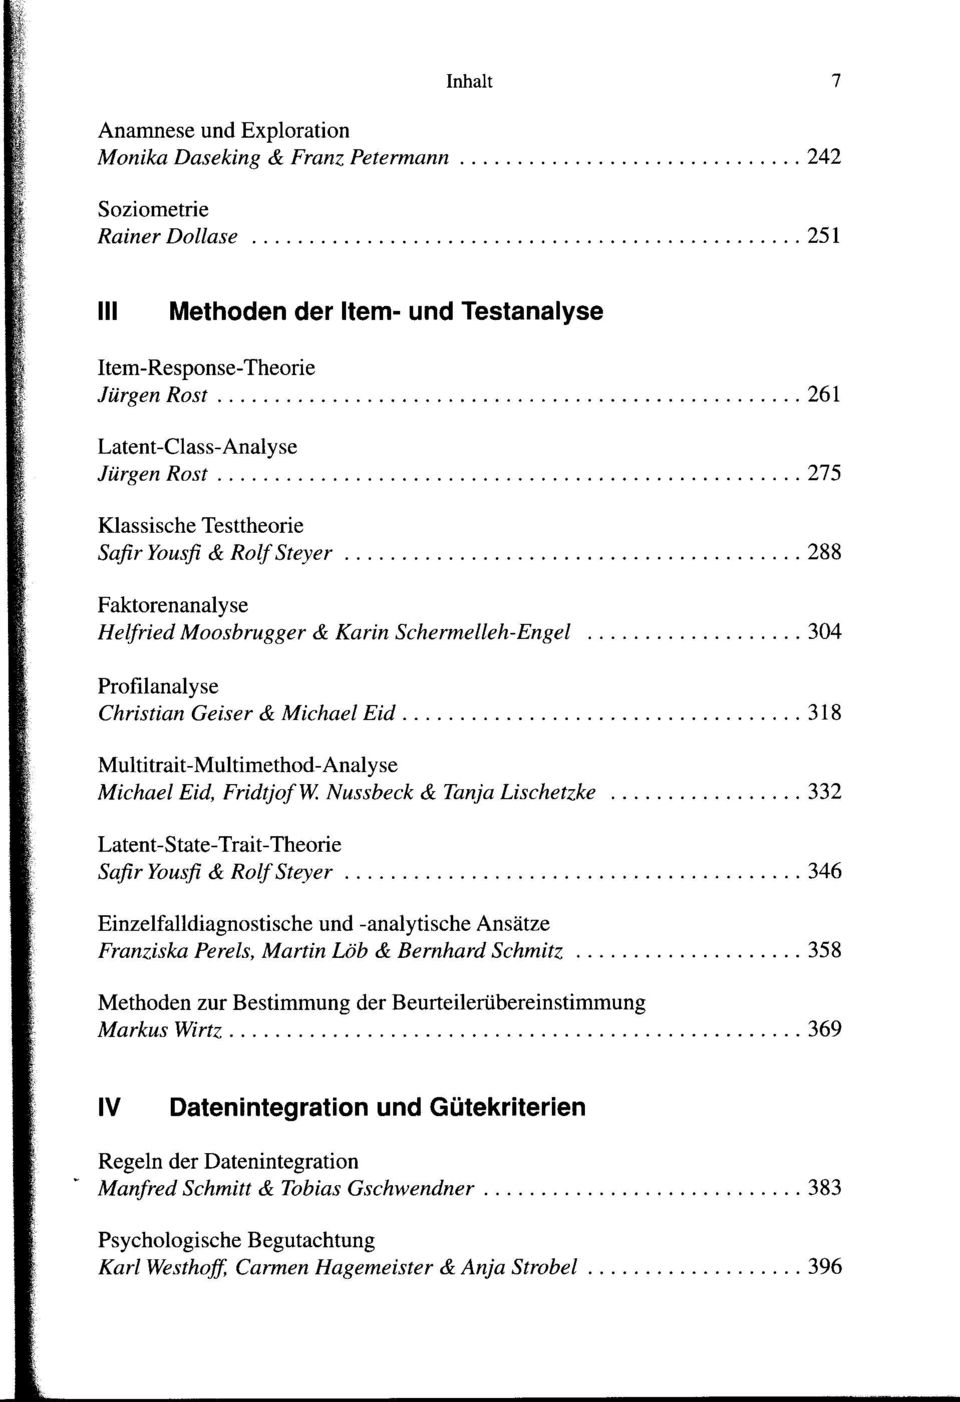 Multitrait-Multimethod- Analyse Michael Eid, Fridtjof W.